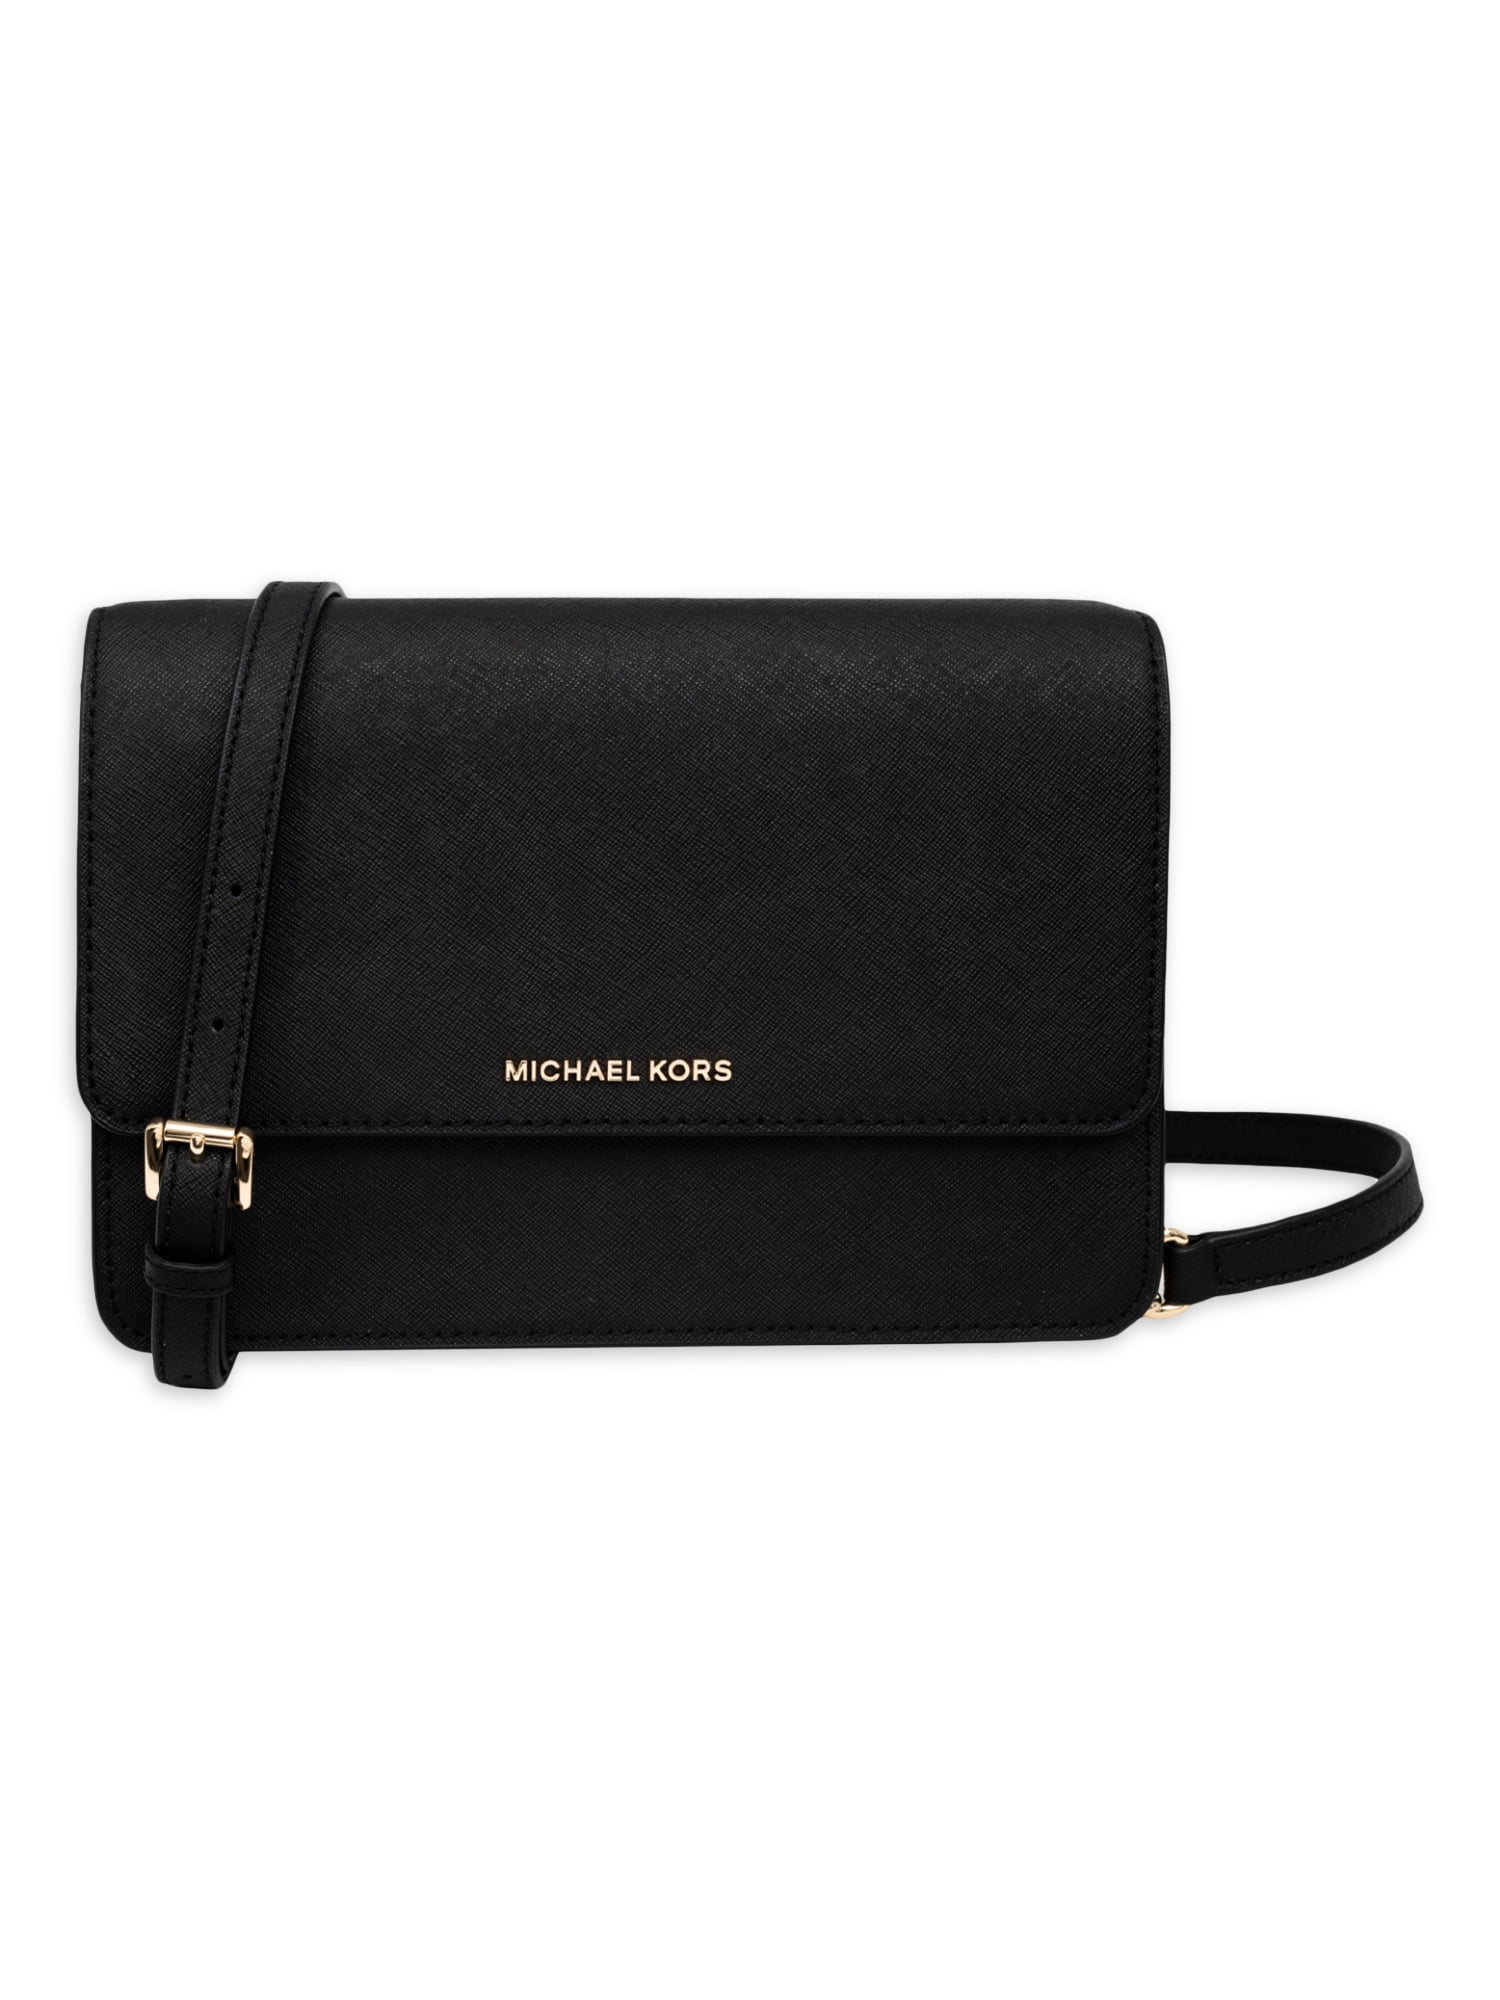 Michael Kors Daniela Large Saffiano Leather Crossbody Bag - Black